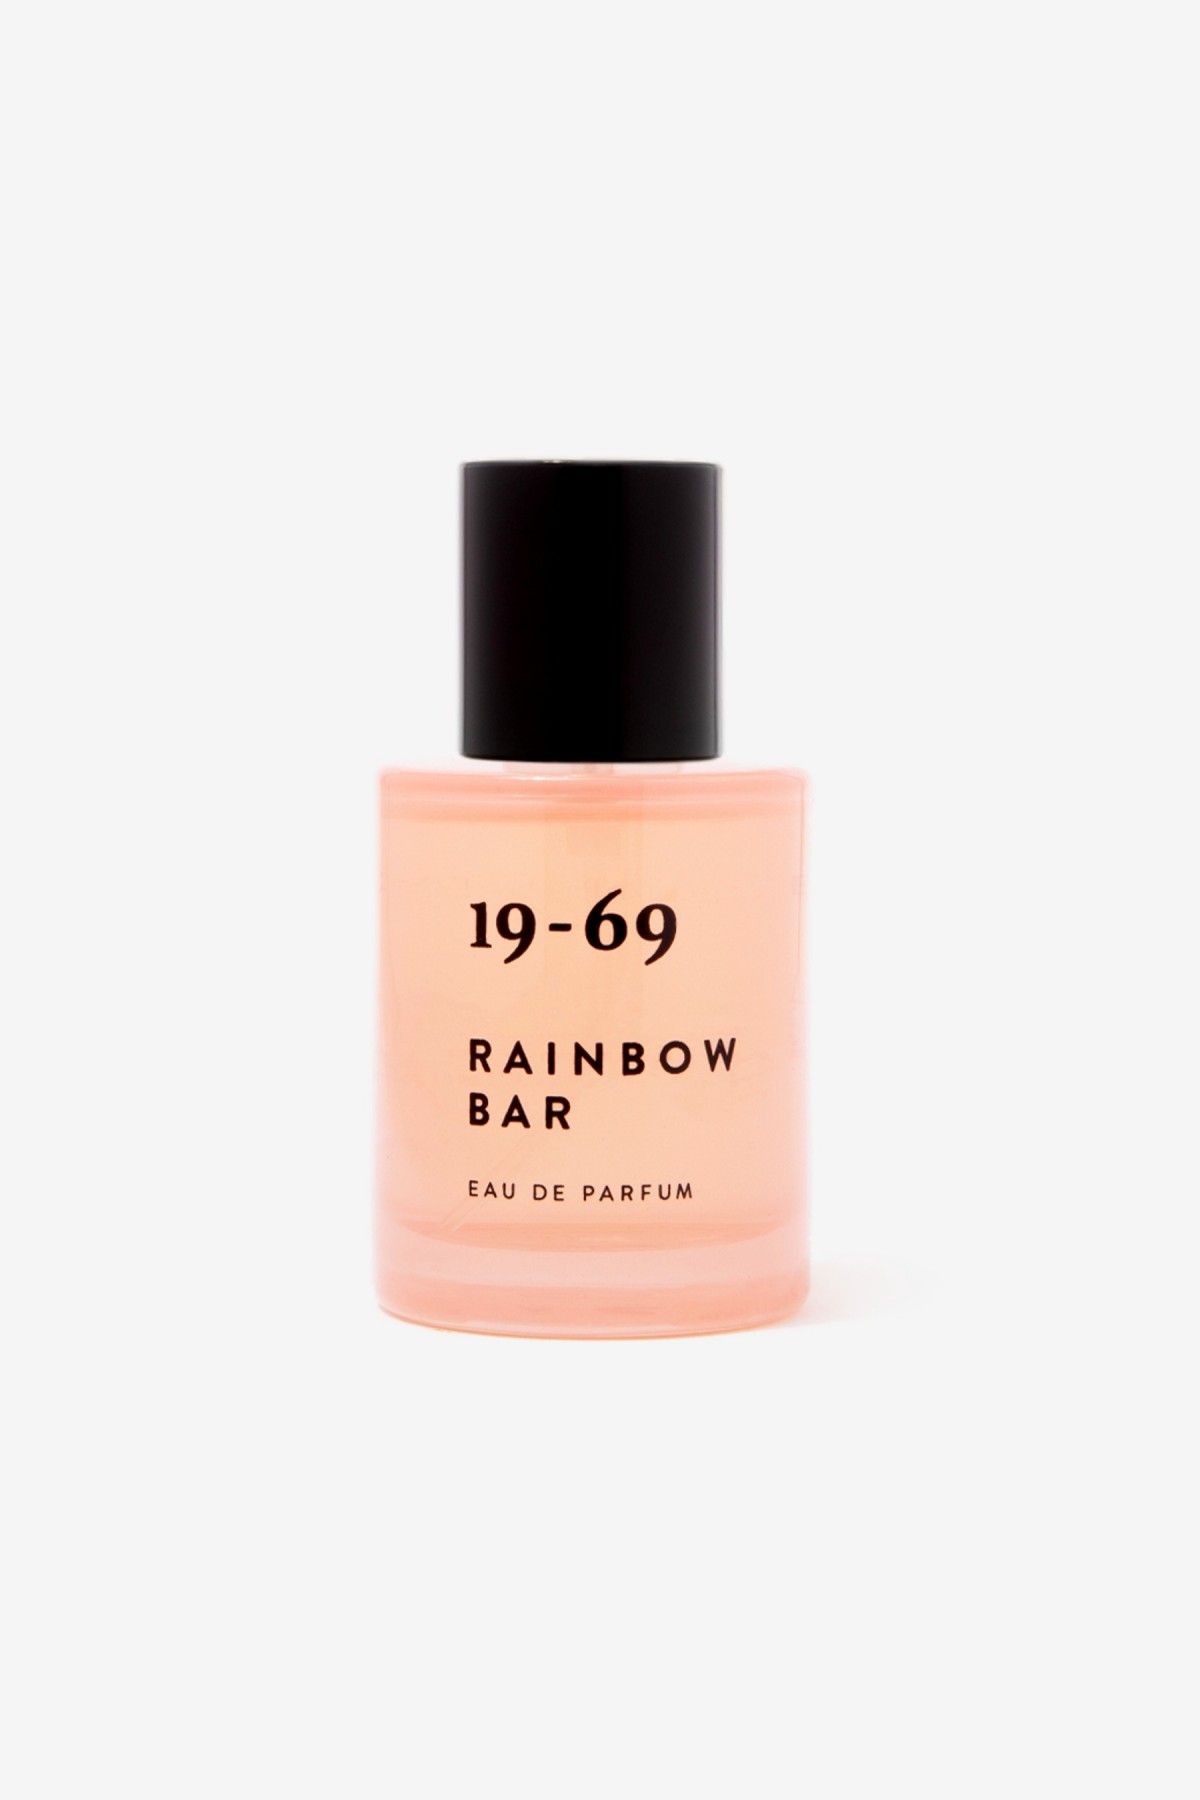 19-69 Rainbow Bar Eau de Parfum in 30ml